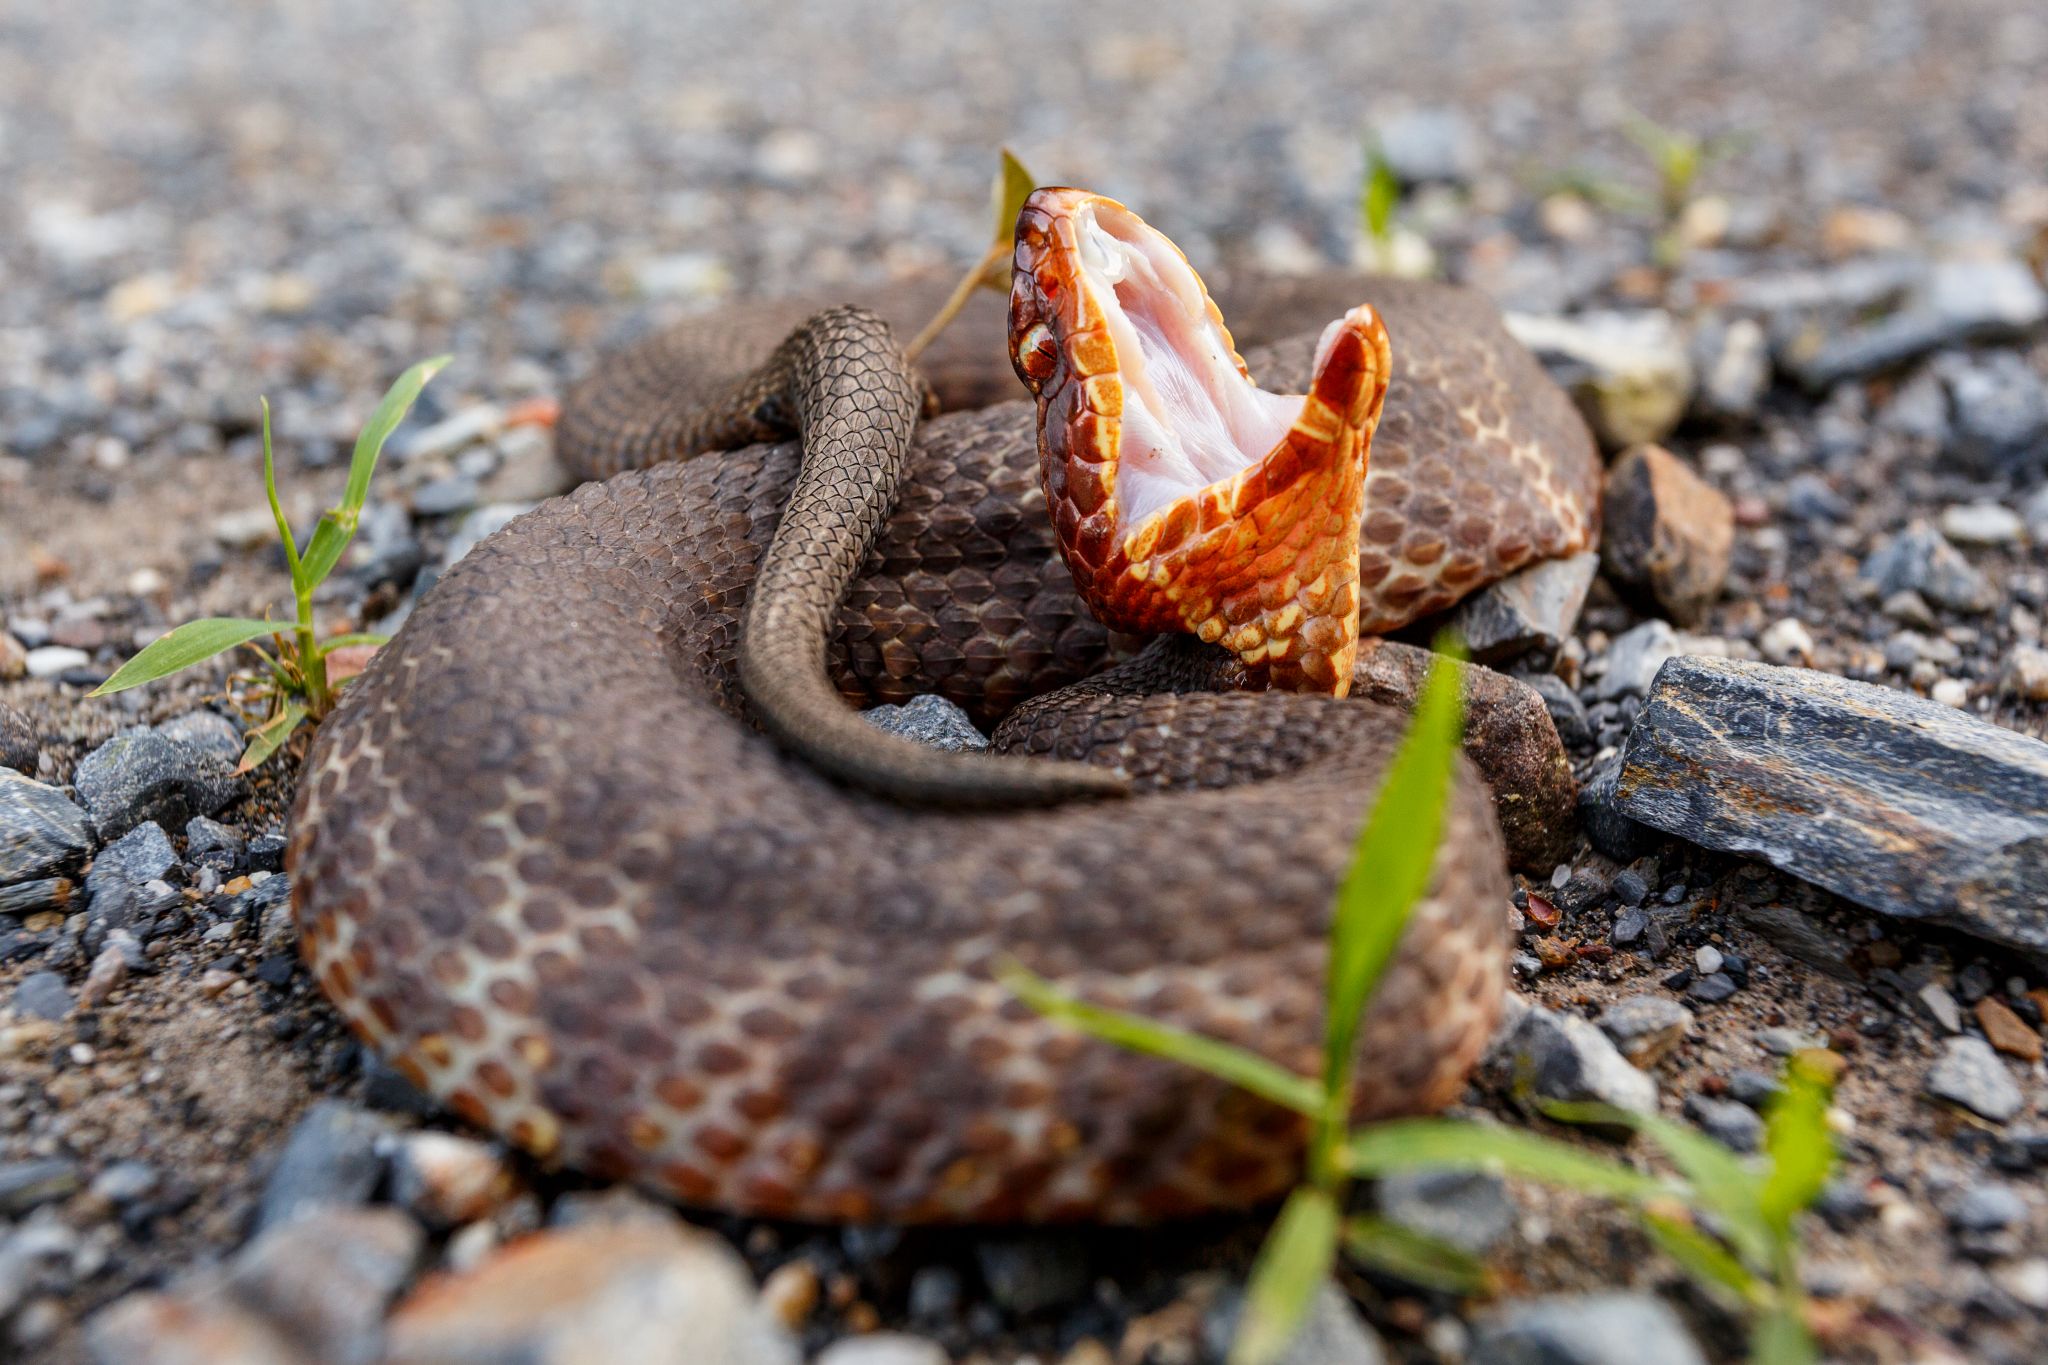 Man discovers he encountered a venomous snake while visiting Battleship Texas ...2048 x 1365